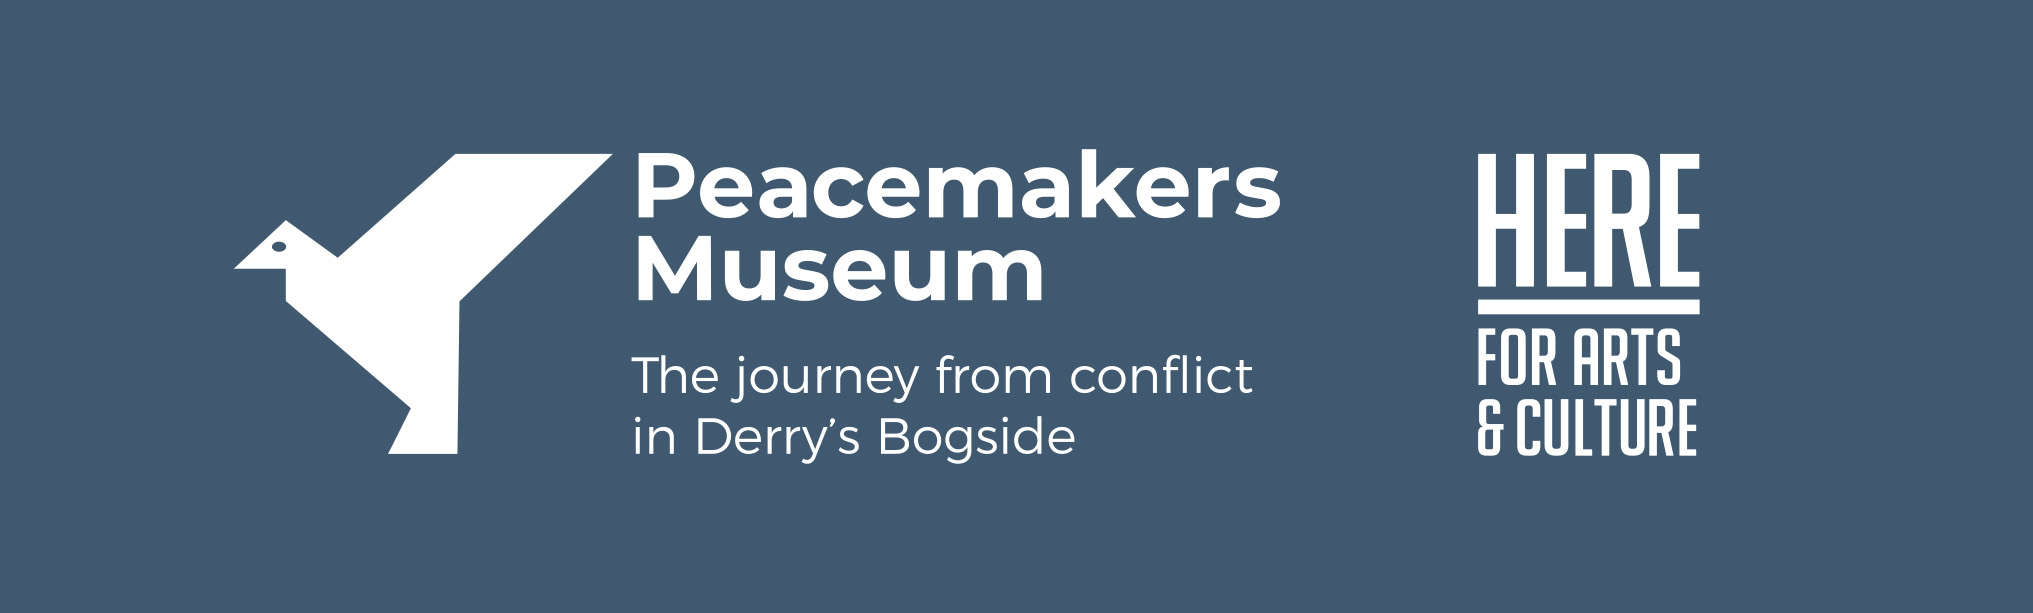 Peacemakers-Museum-Here-Partner-Logo.jpg